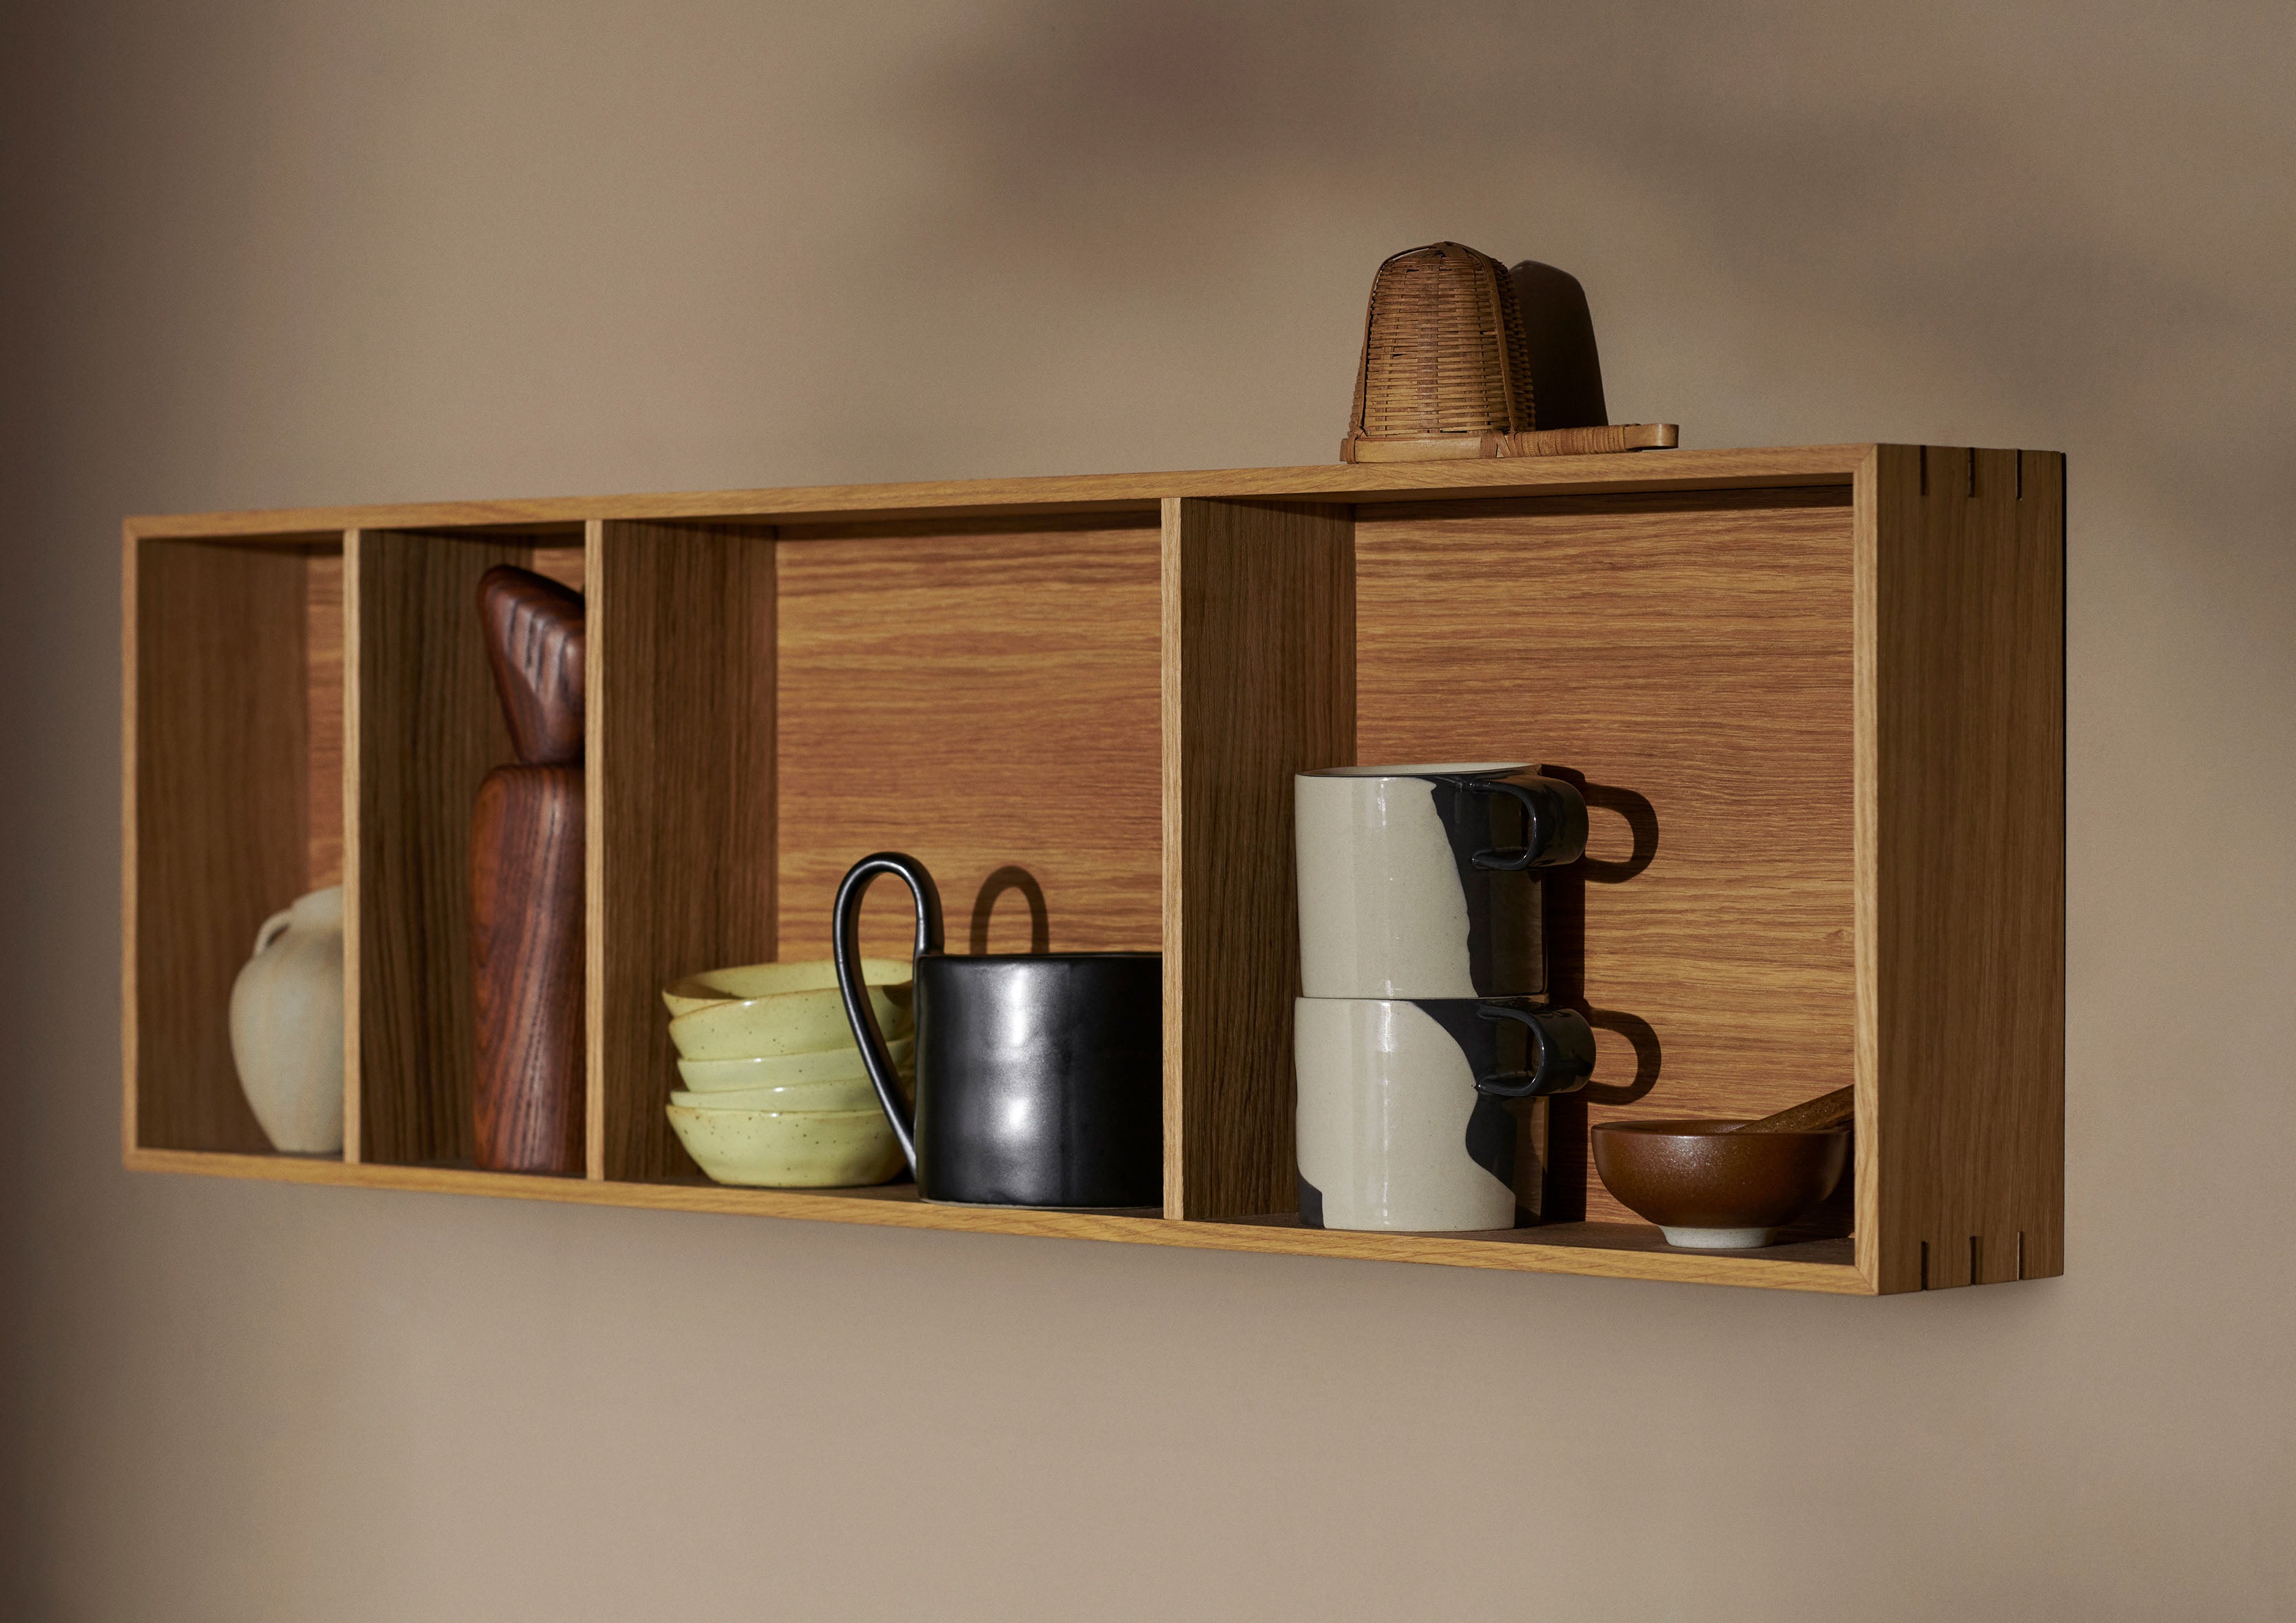 Bon Shelf in-situ. Image provided by Ferm Living